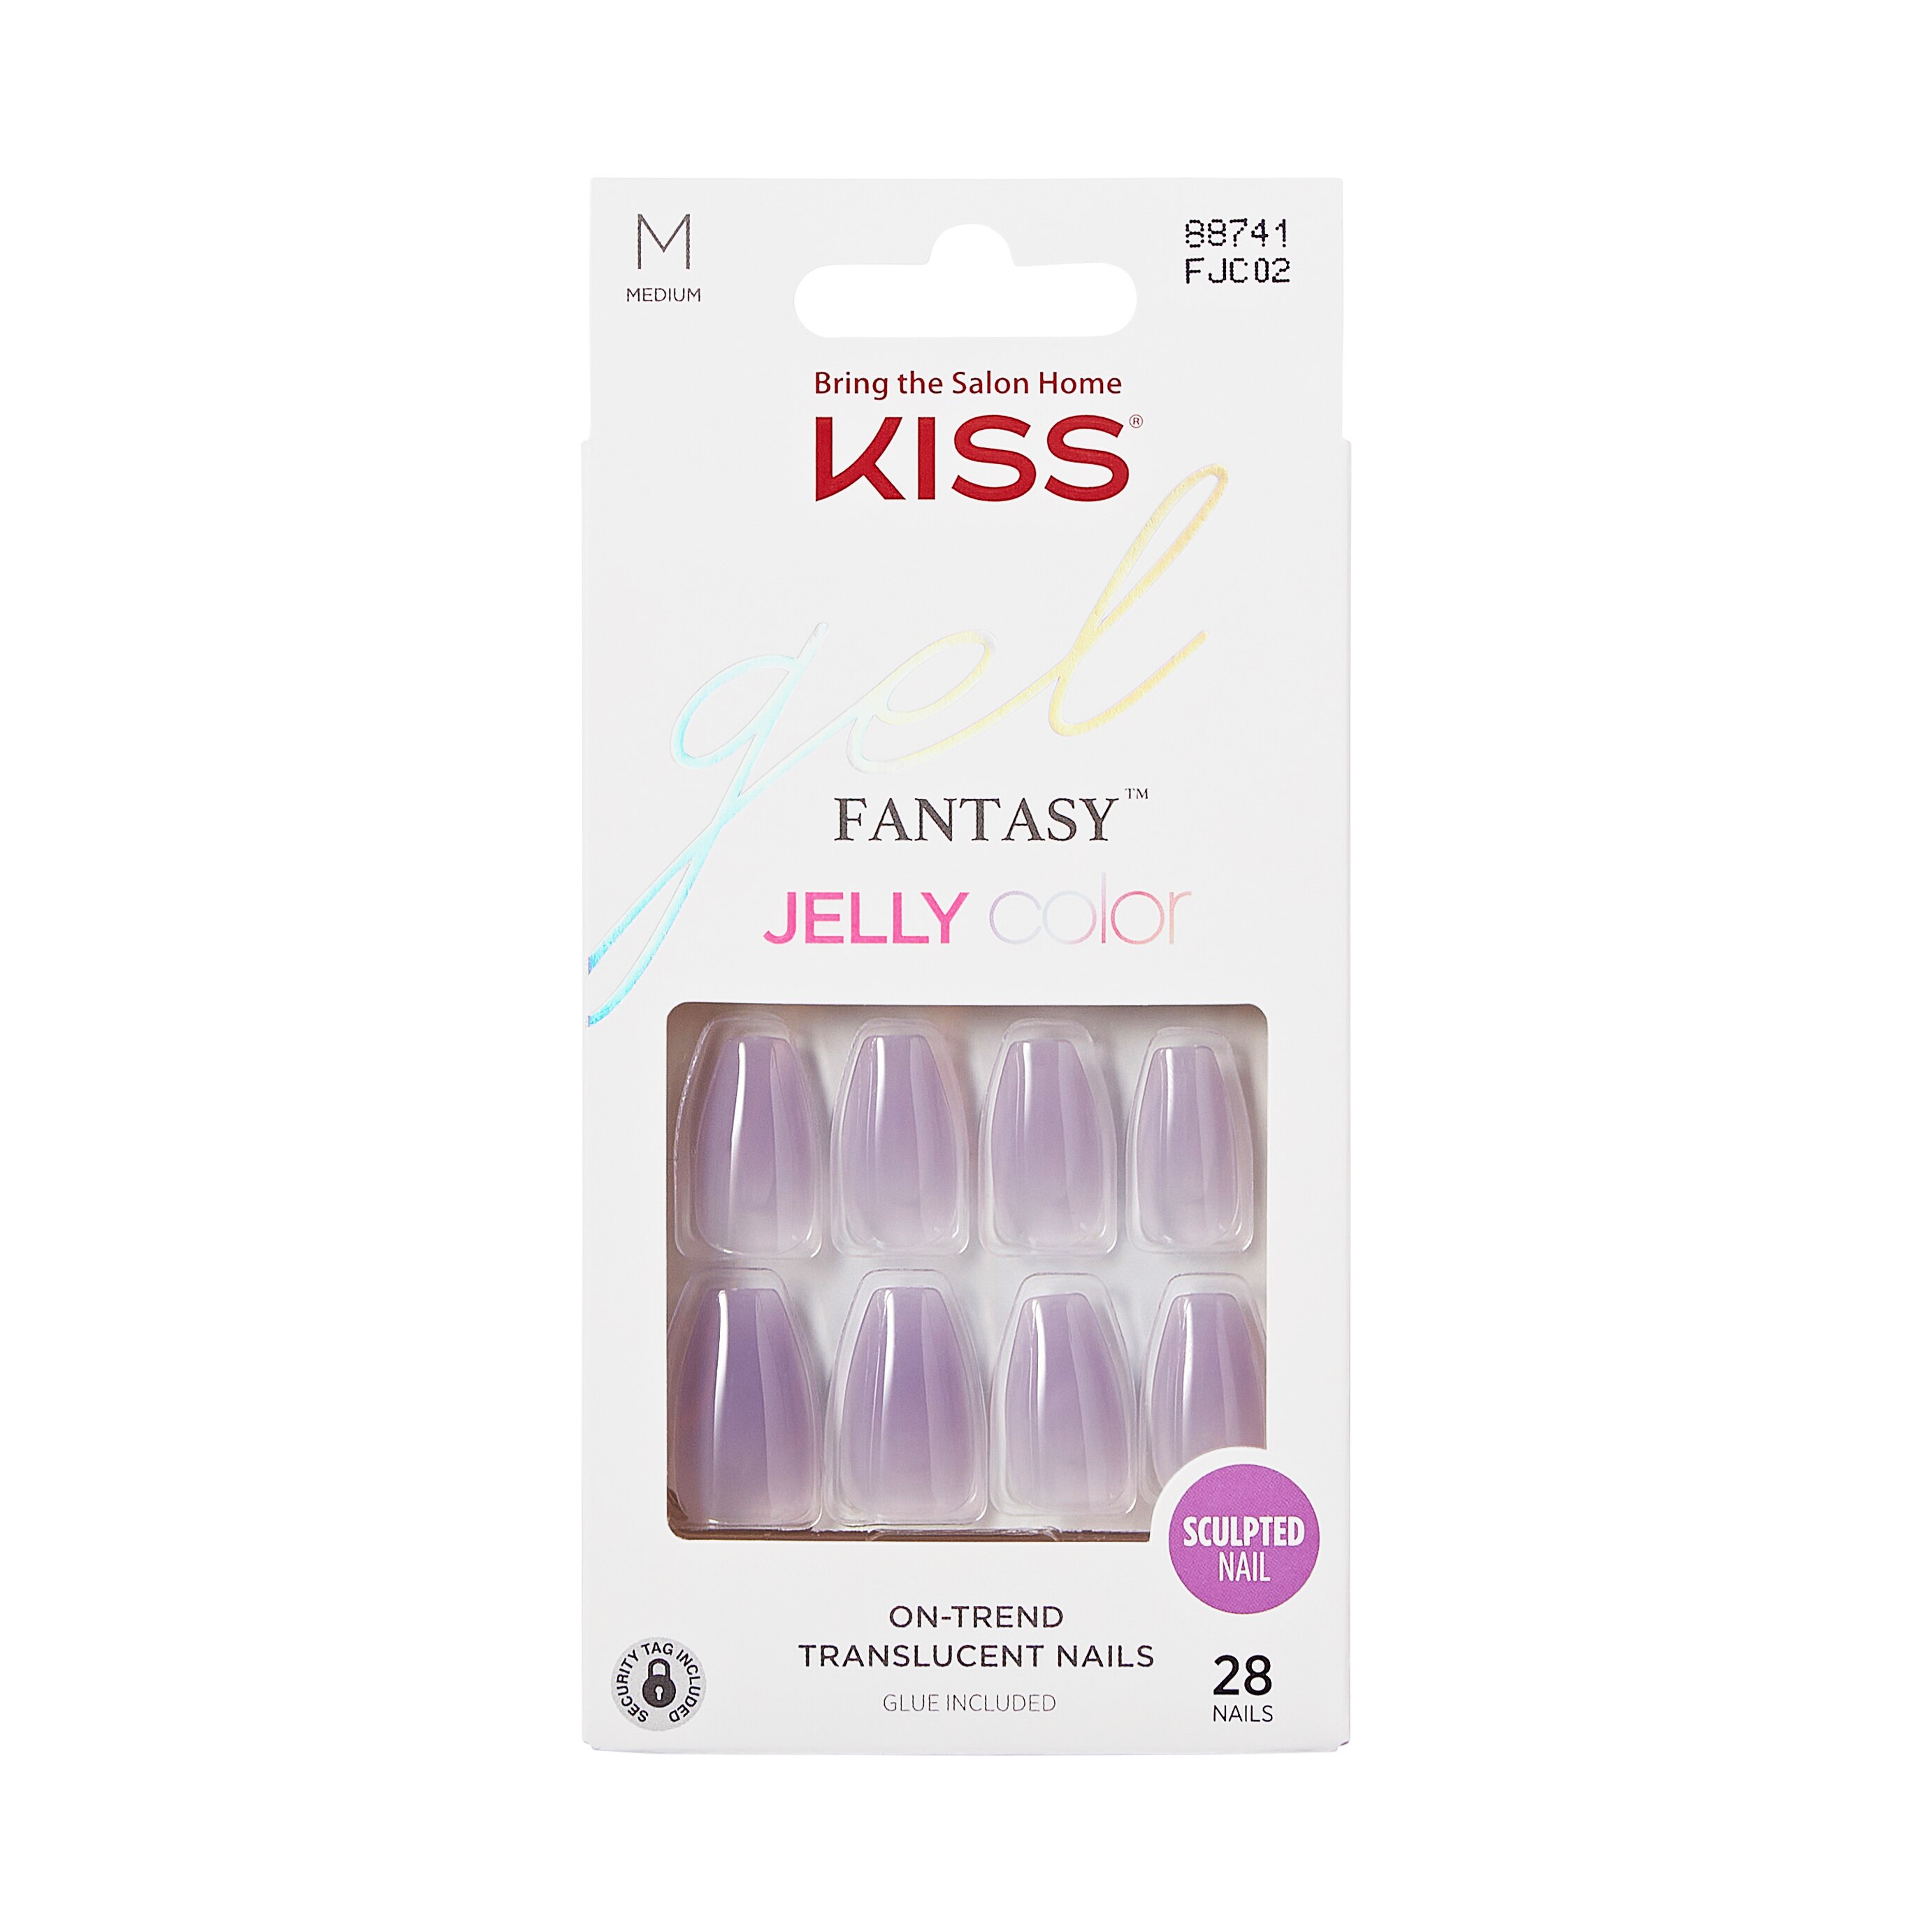 KISS Gel Fantasy Jelly Color Sculpted False Nails